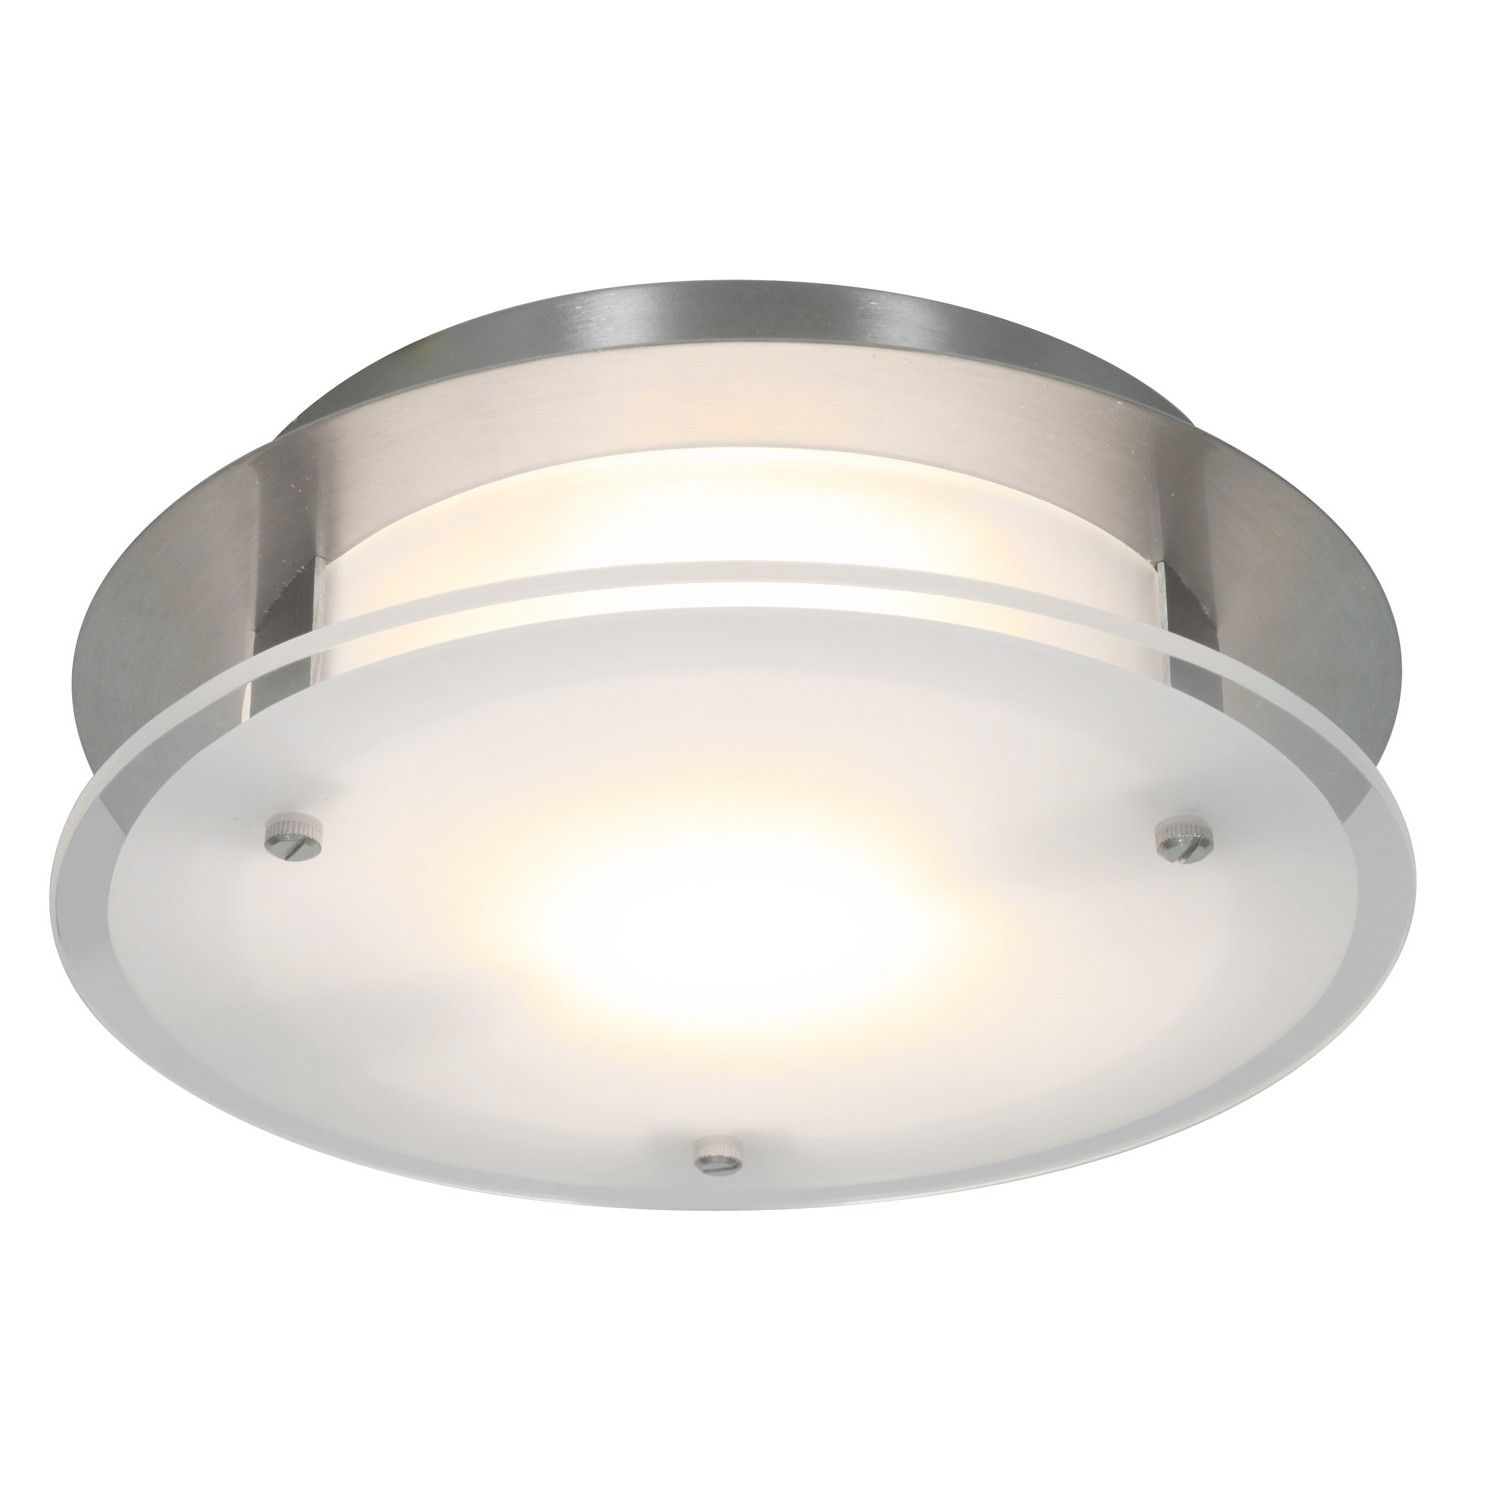 Luxury Ductless Bathroom Fan With Light Bathroom Fan Light with regard to measurements 1500 X 1500